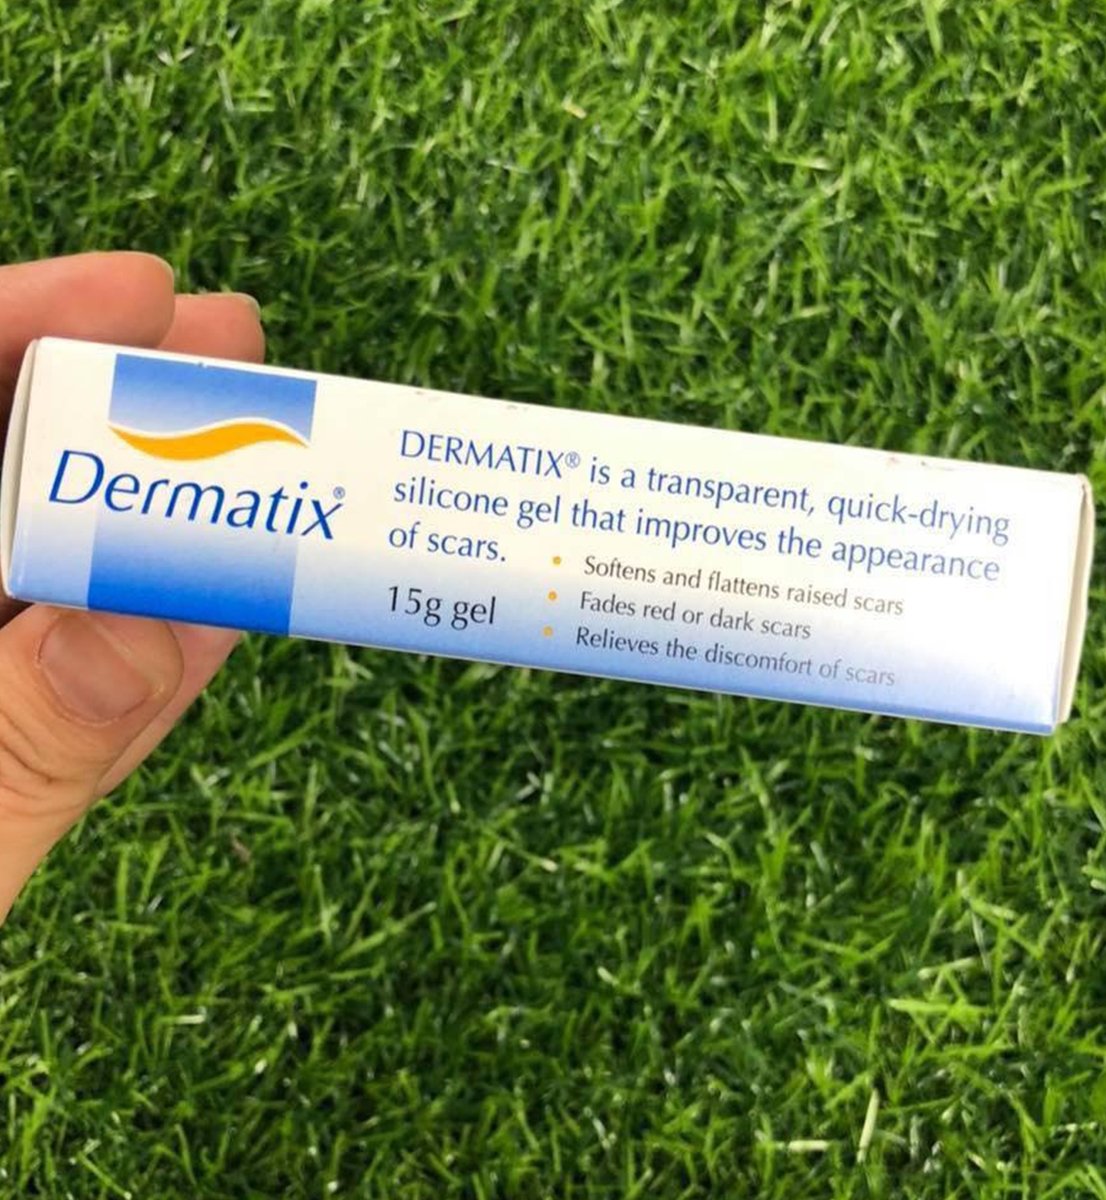 
                  
                    Dermatix - Silicone gel for scar reduction - Lemonbaby
                  
                